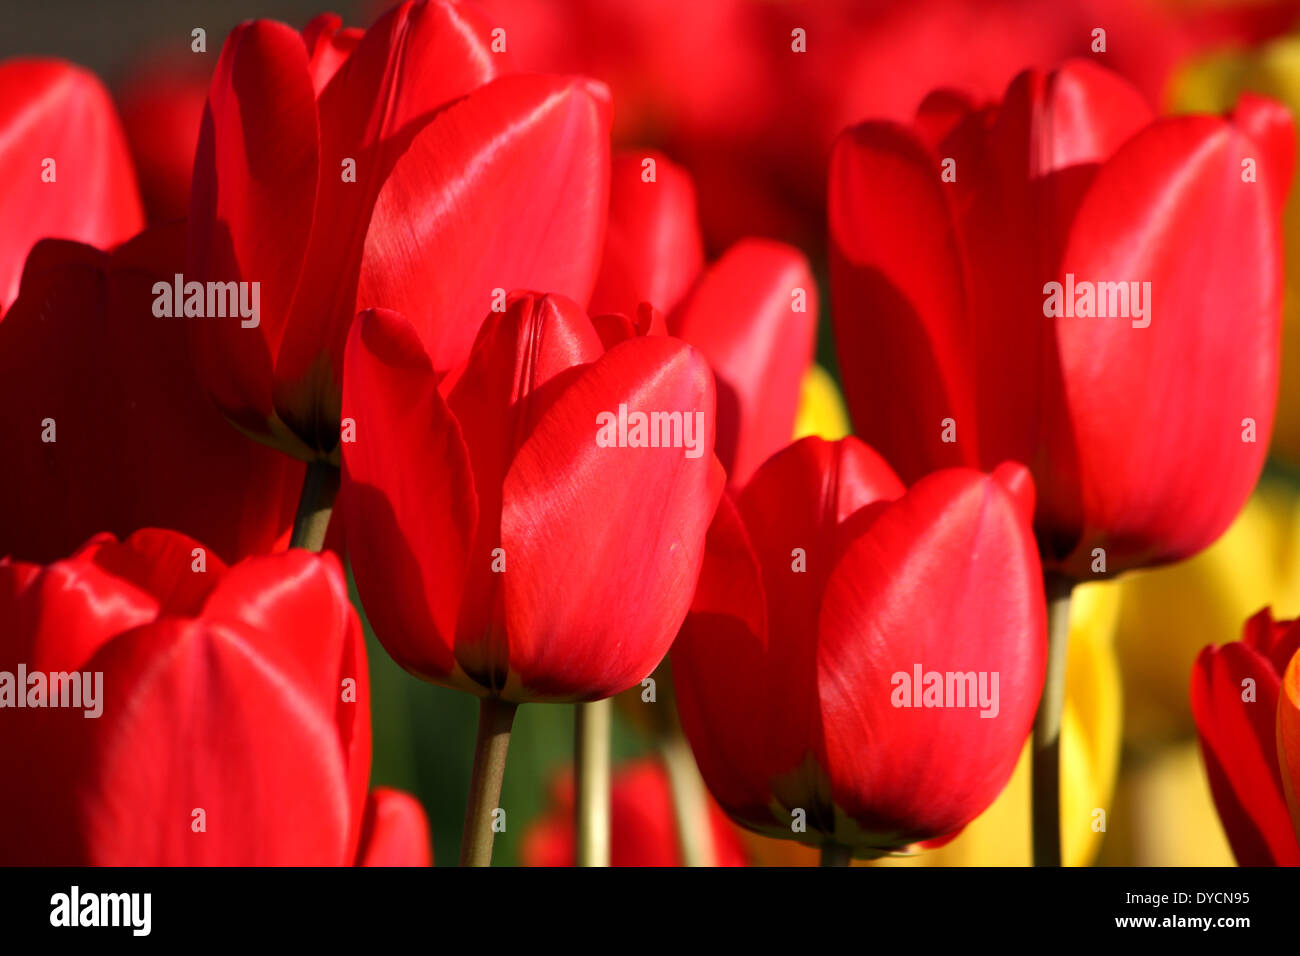 File:Full bloom fiery tulips - panoramio.jpg - Wikimedia Commons